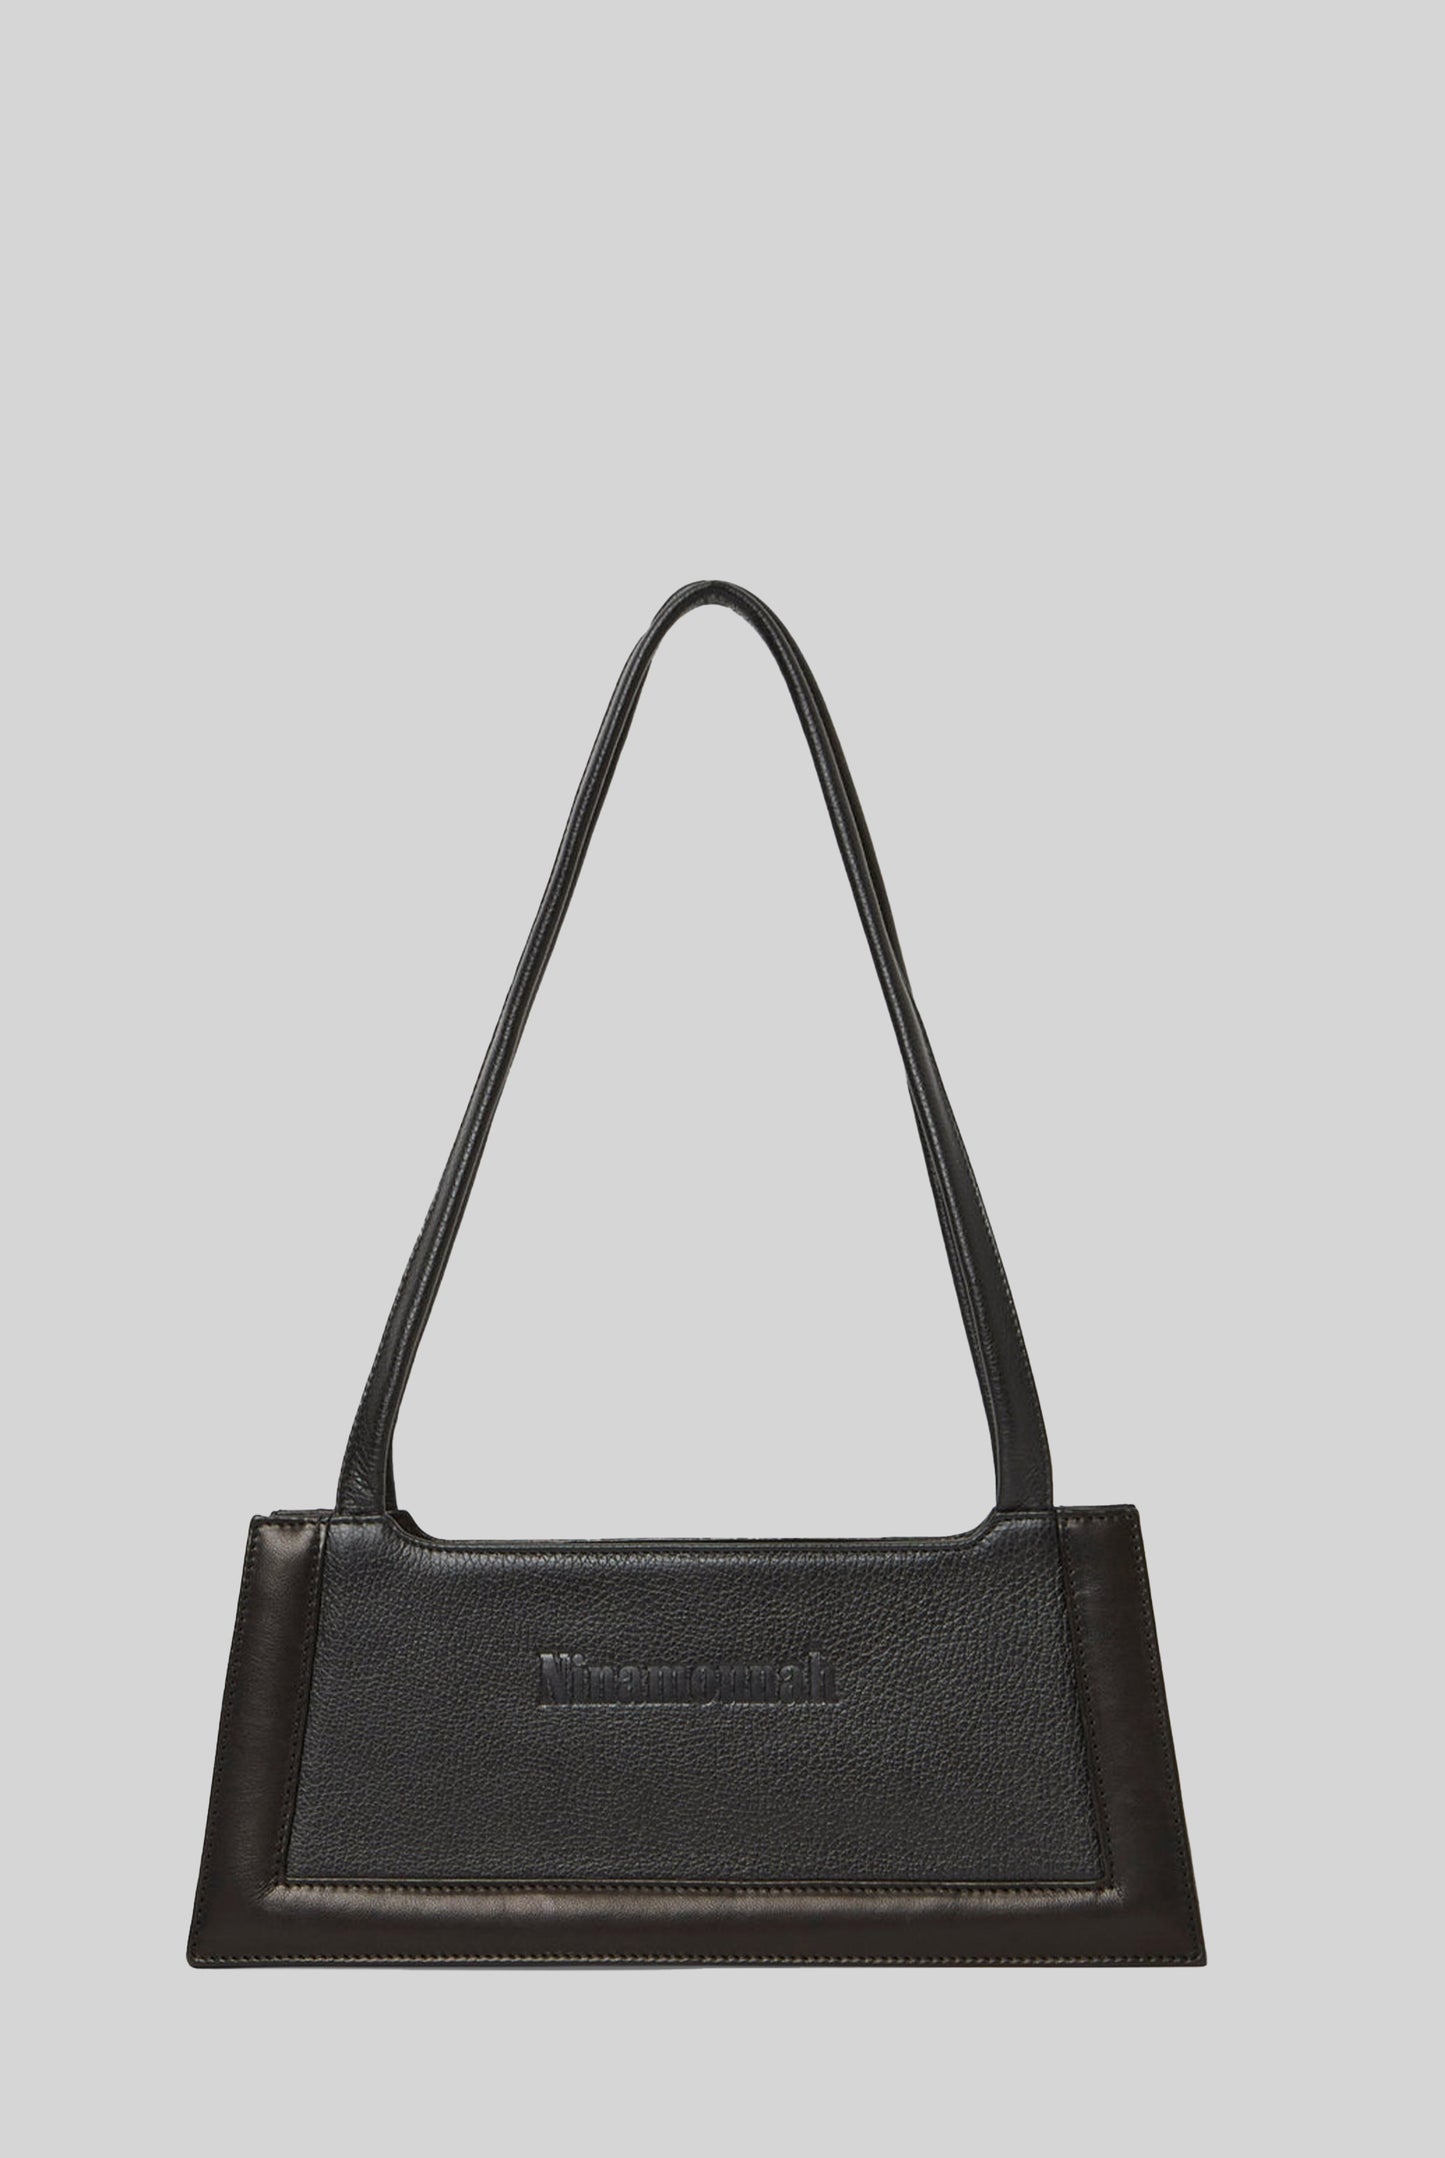 Animal Mini Leather Shoulder Bag in Black/Black